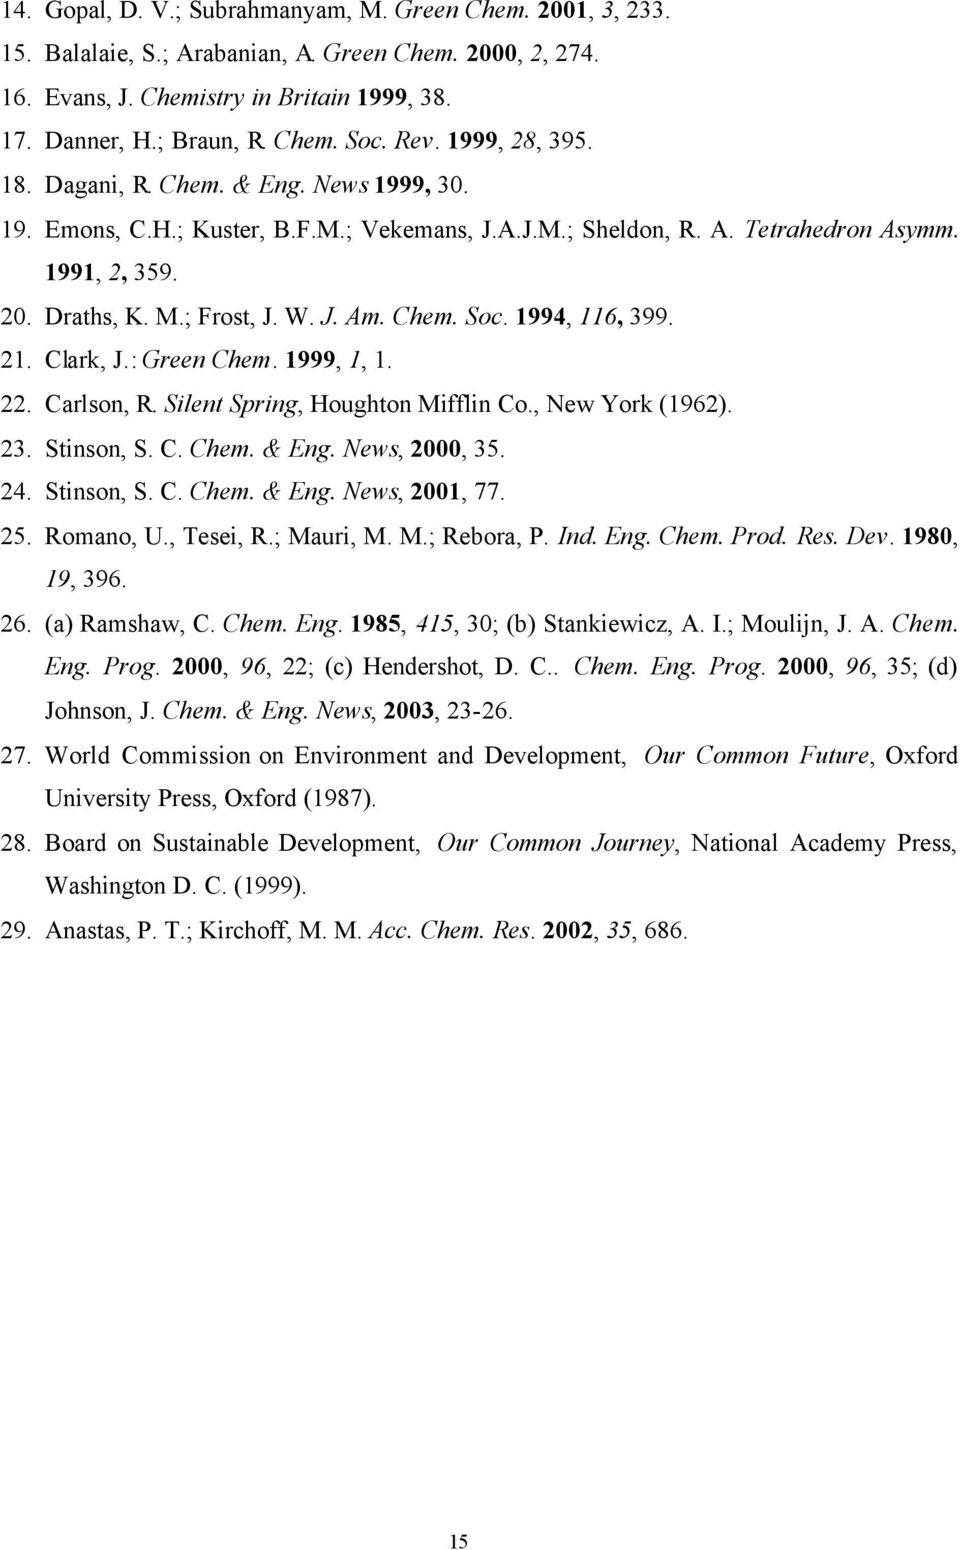 Chem. Soc. 1994, 116, 399. 21. Clark, J.: Green Chem. 1999, 1, 1. 22. Carlson, R. Silent Spring, Houghton Mifflin Co., New York (1962). 23. Stinson, S. C. Chem. & Eng. News, 2000, 35. 24. Stinson, S. C. Chem. & Eng. News, 2001, 77.